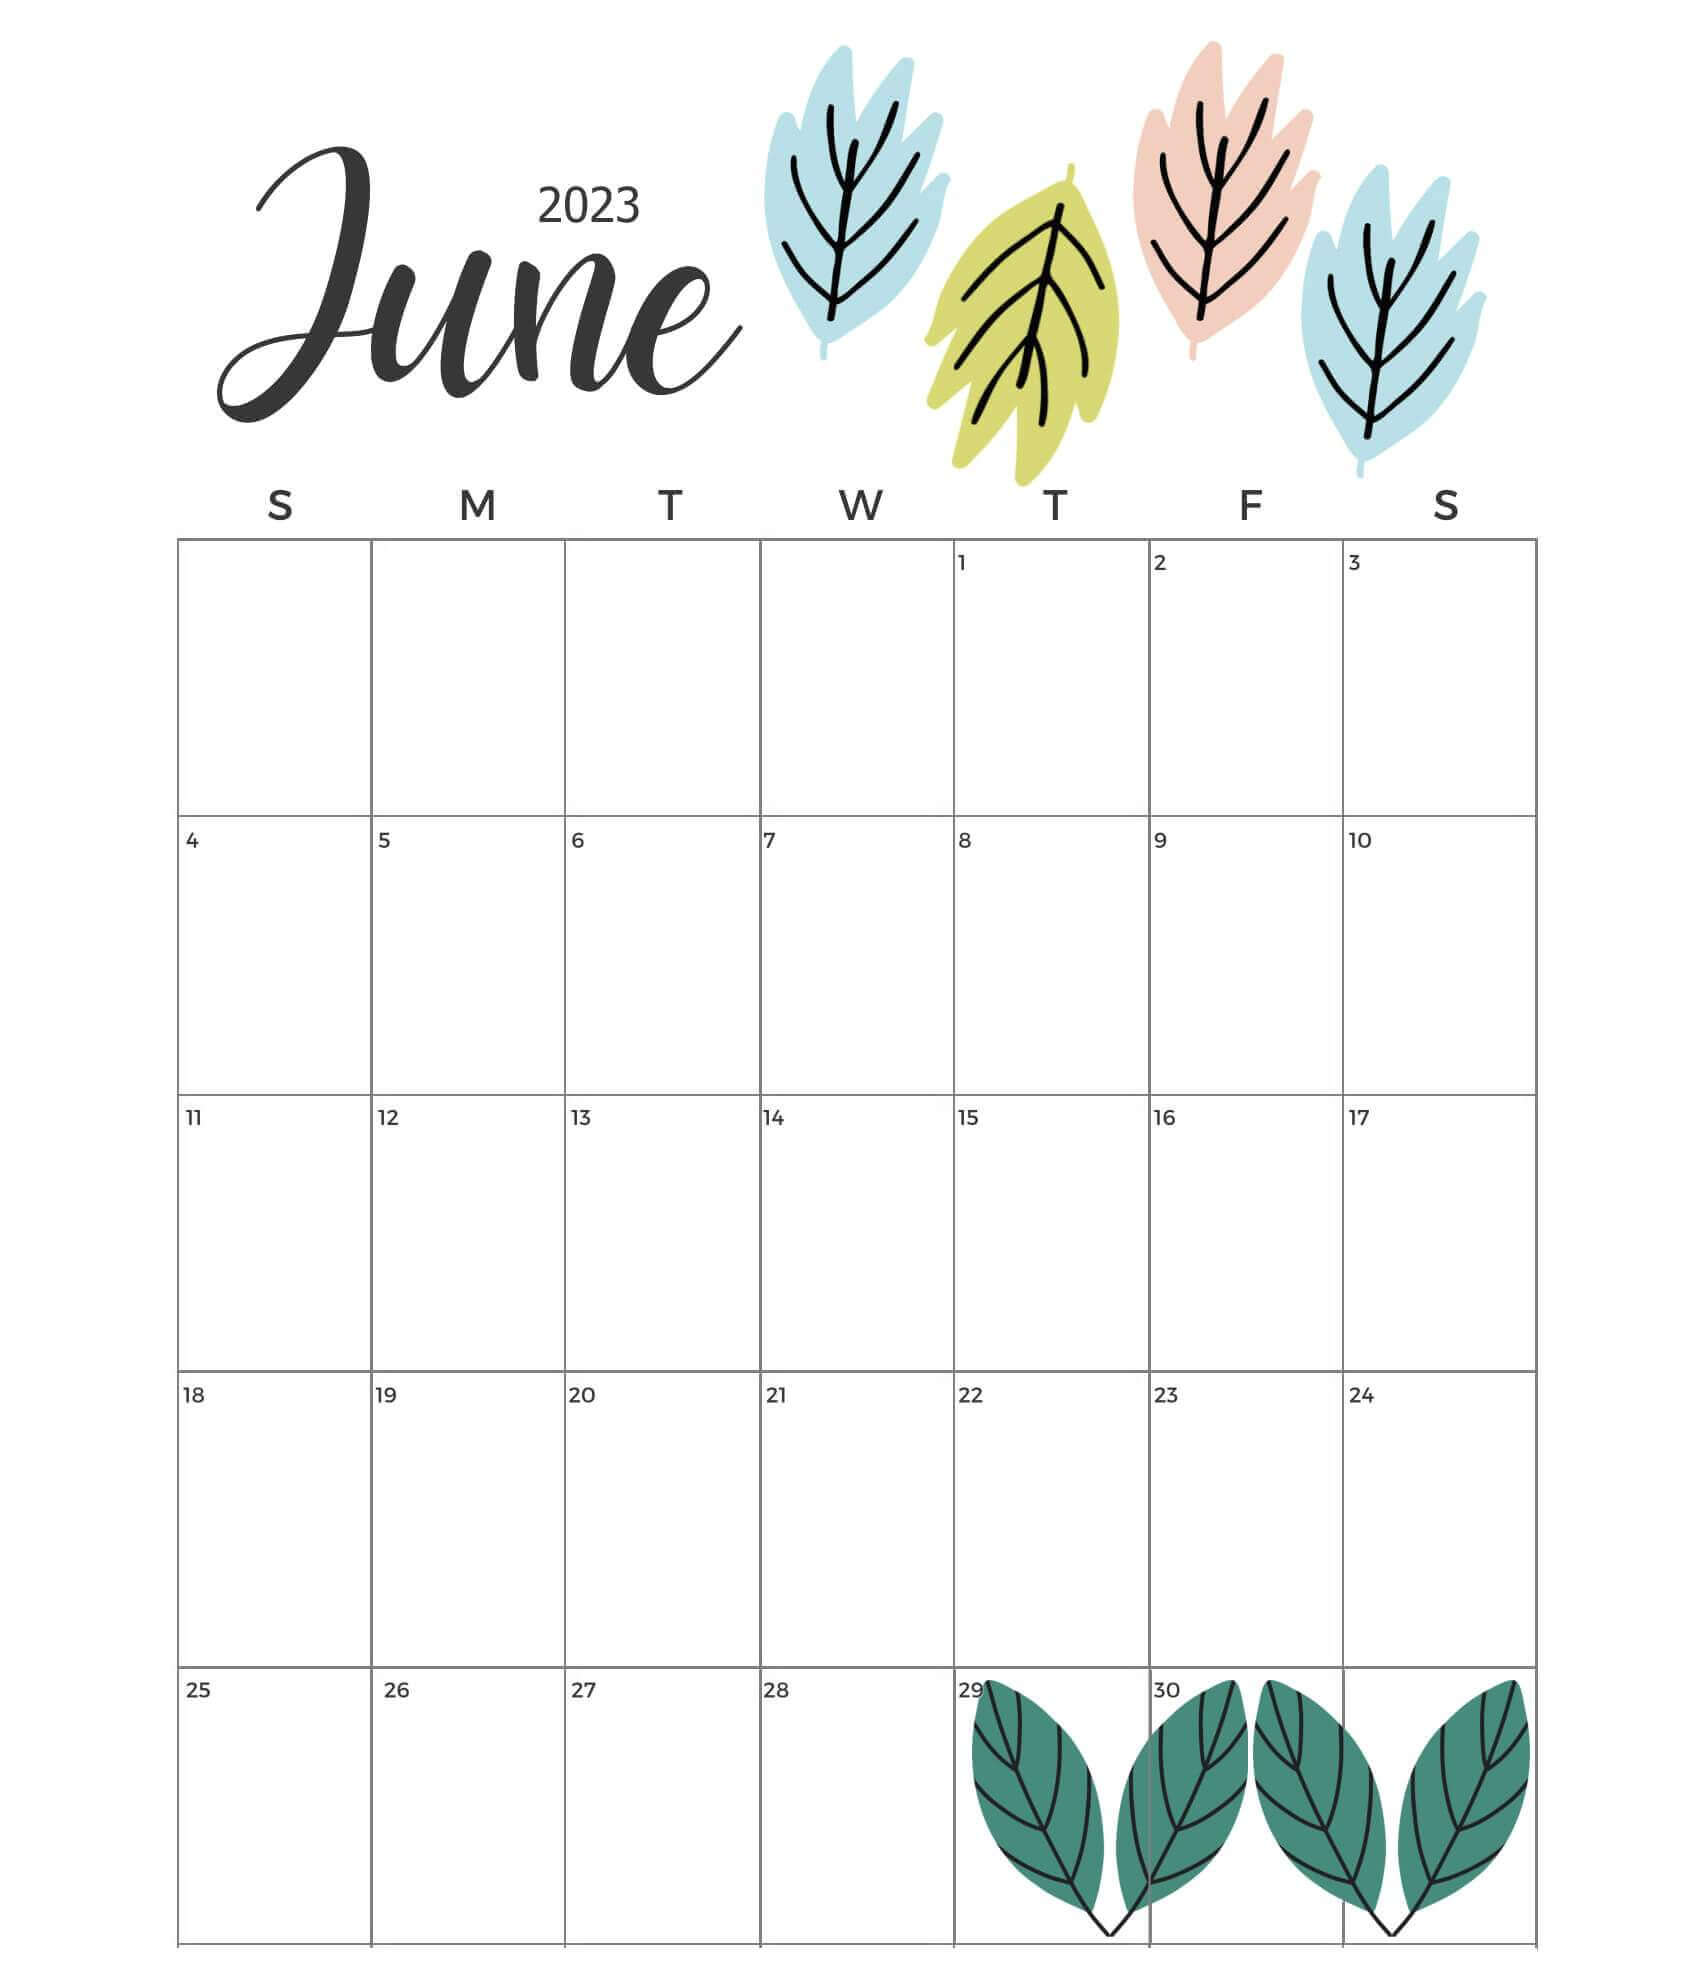 Cute June 2023 Calendar Floral Designs Wallpapers